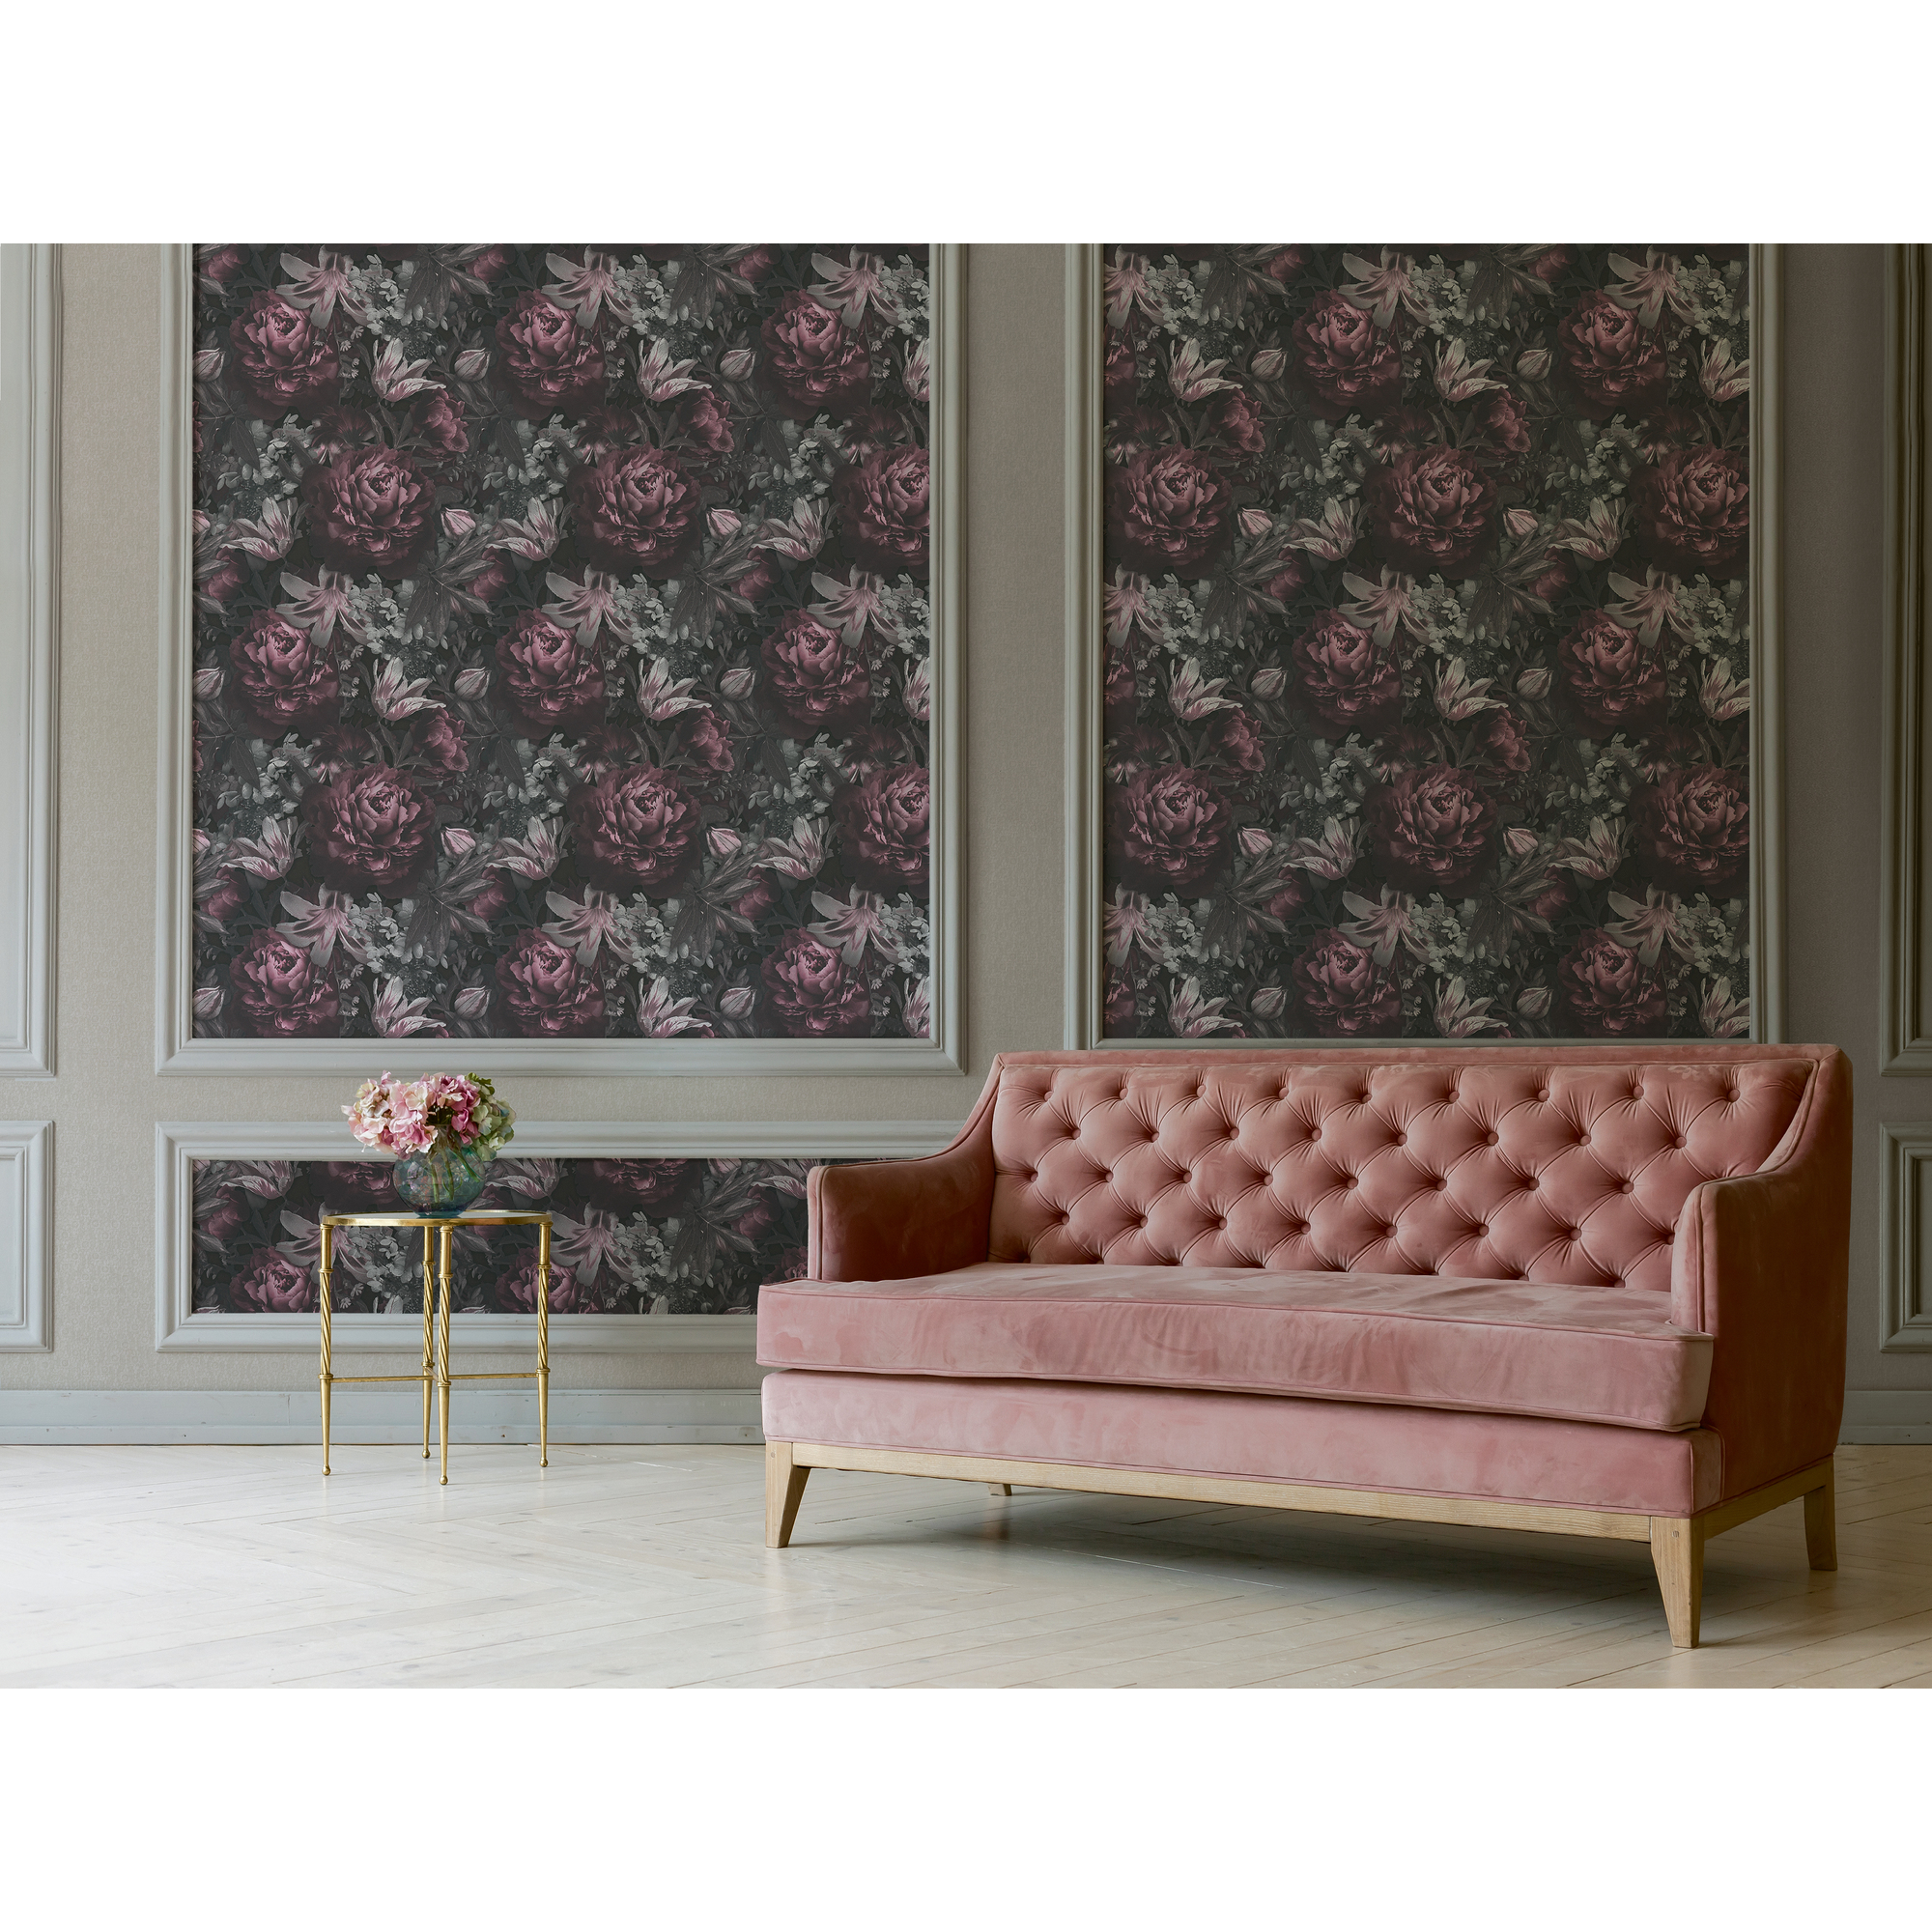 Vliestapete 'Pint Walls' Pfingstrose schwarz/rosa 10,05 x 0,53 m + product picture